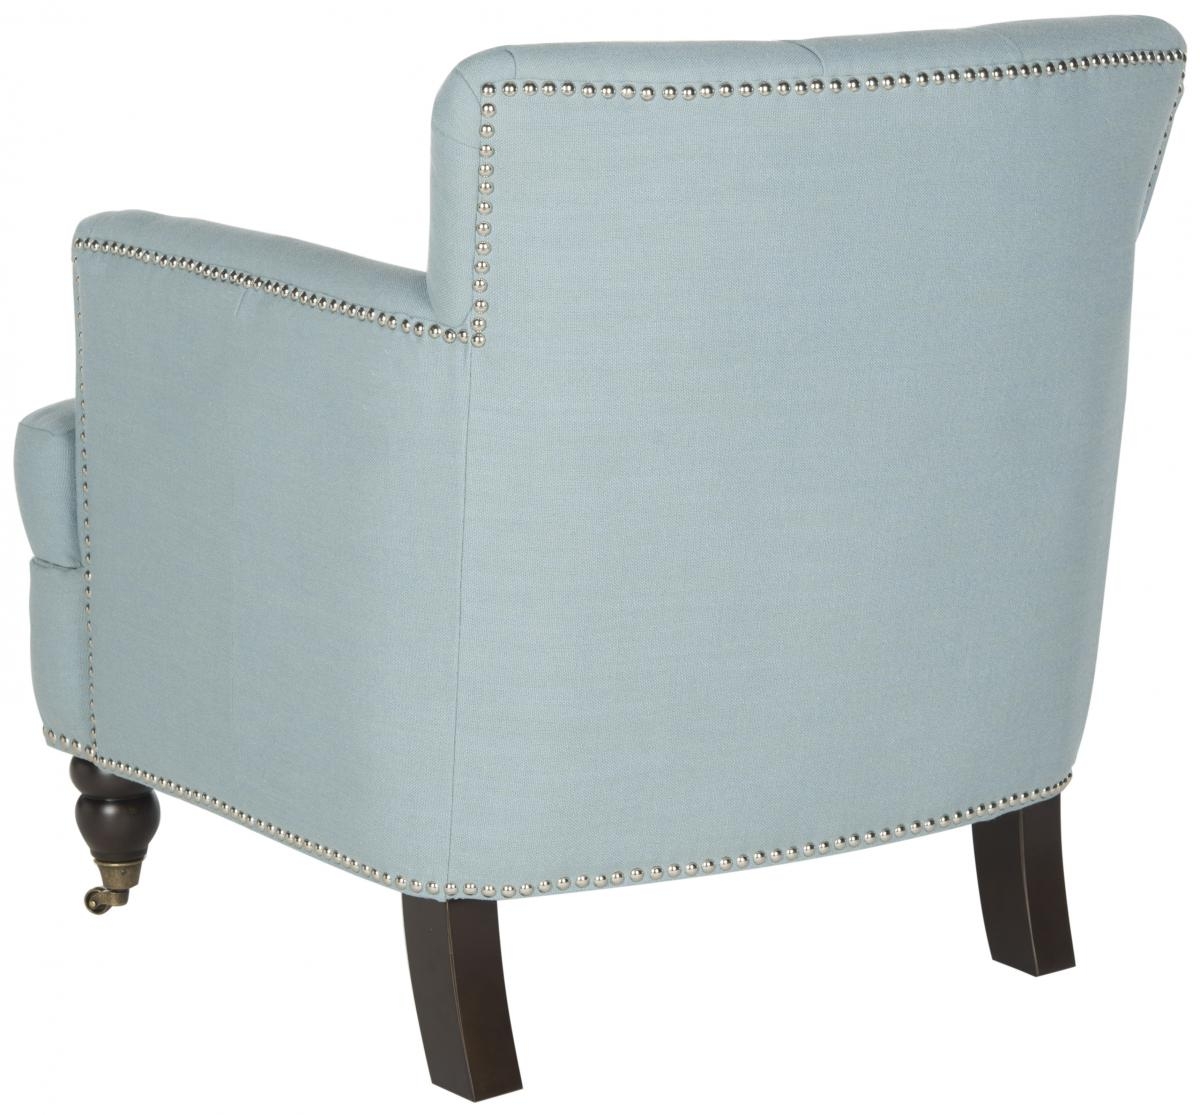 Colin Tufted Club Chair - Sky Blue/Espresso - Arlo Home - Image 2